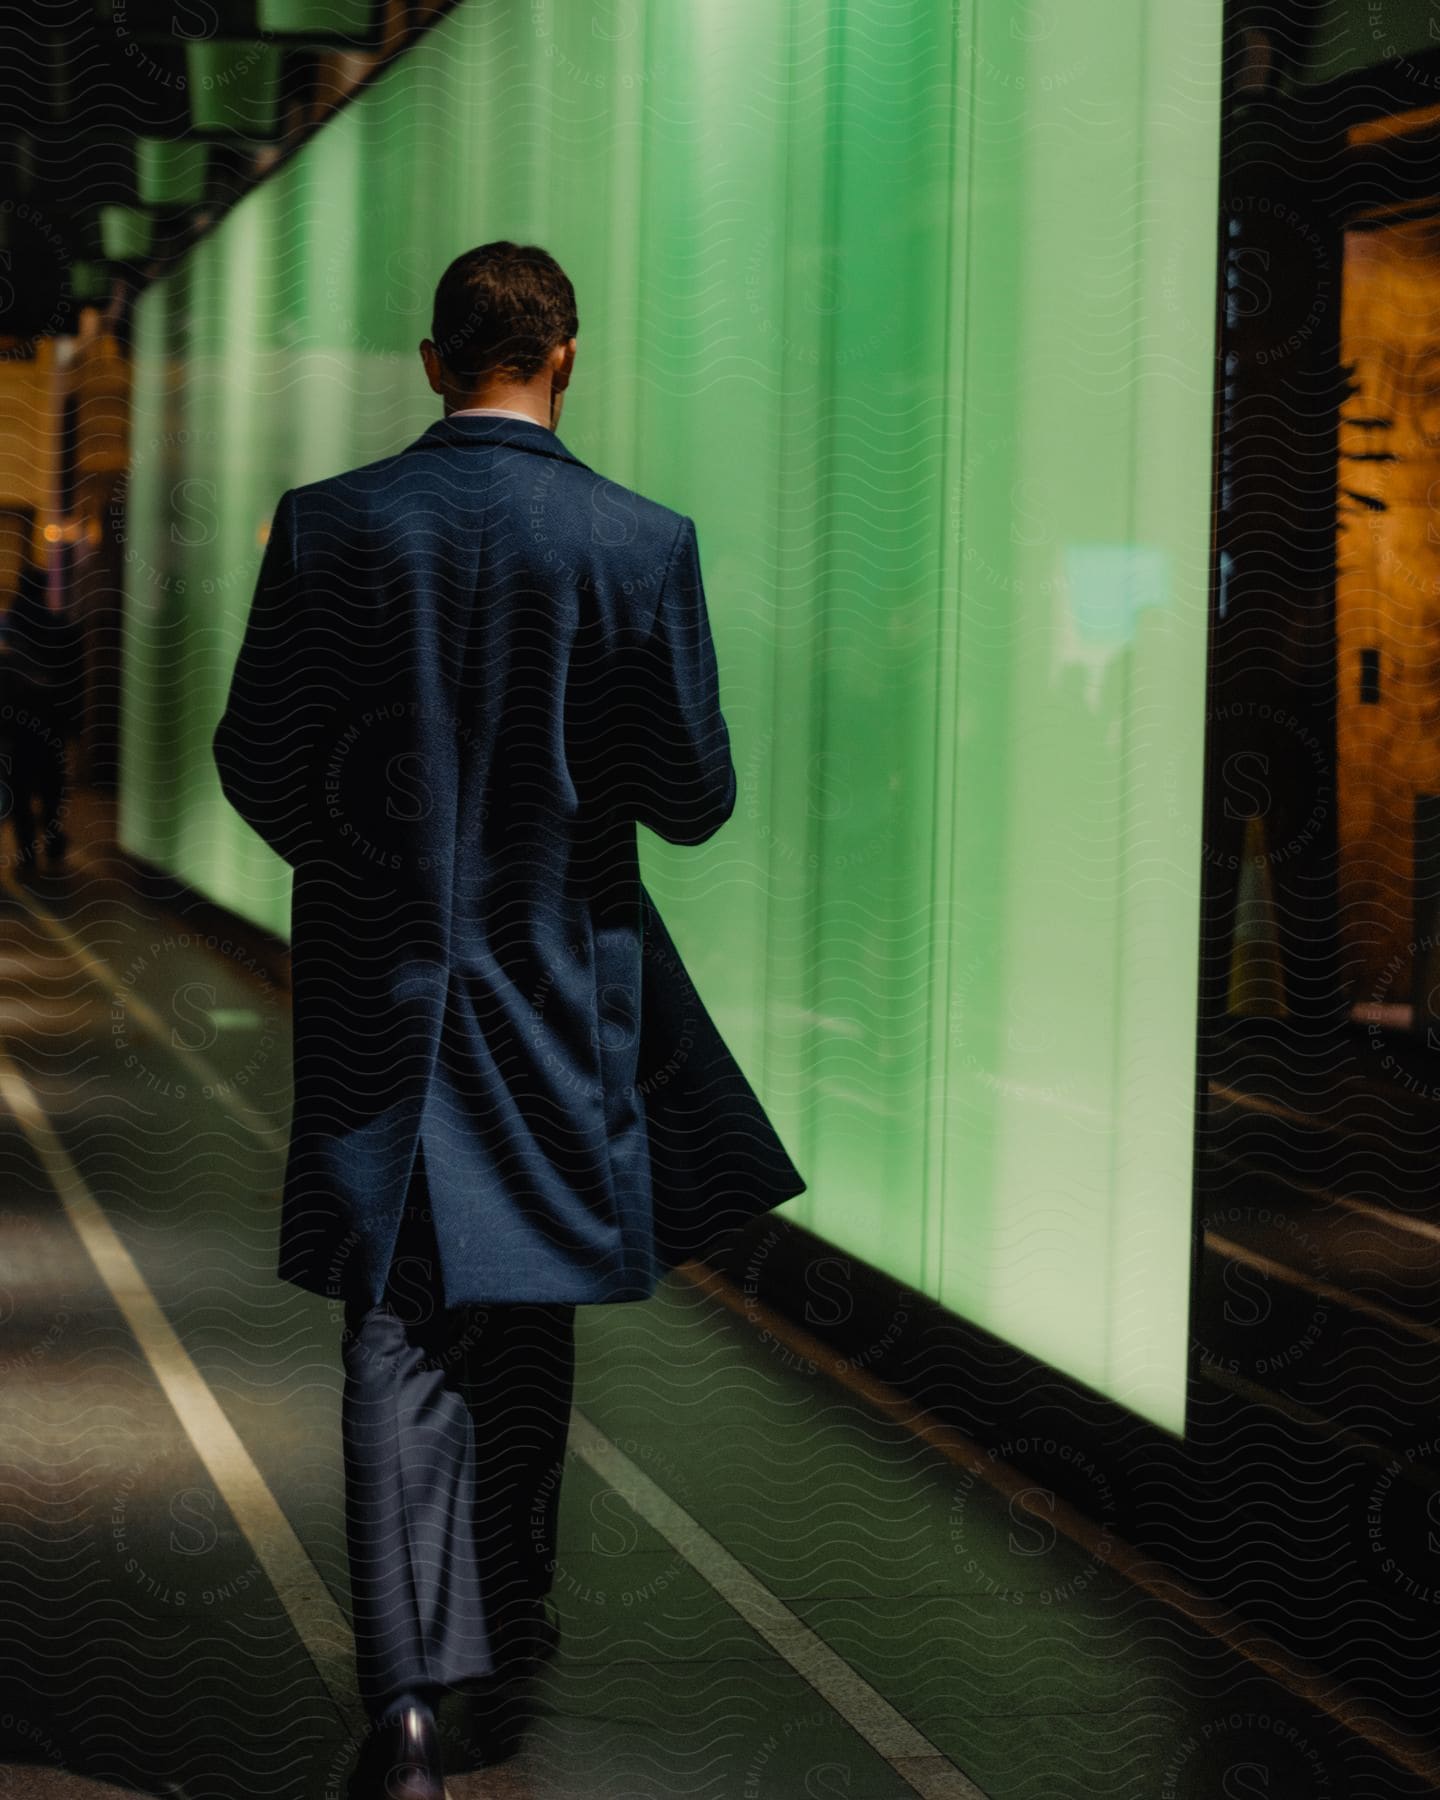 Man in a navy coat walking past a glowing green wall in a modern, dimly lit corridor.